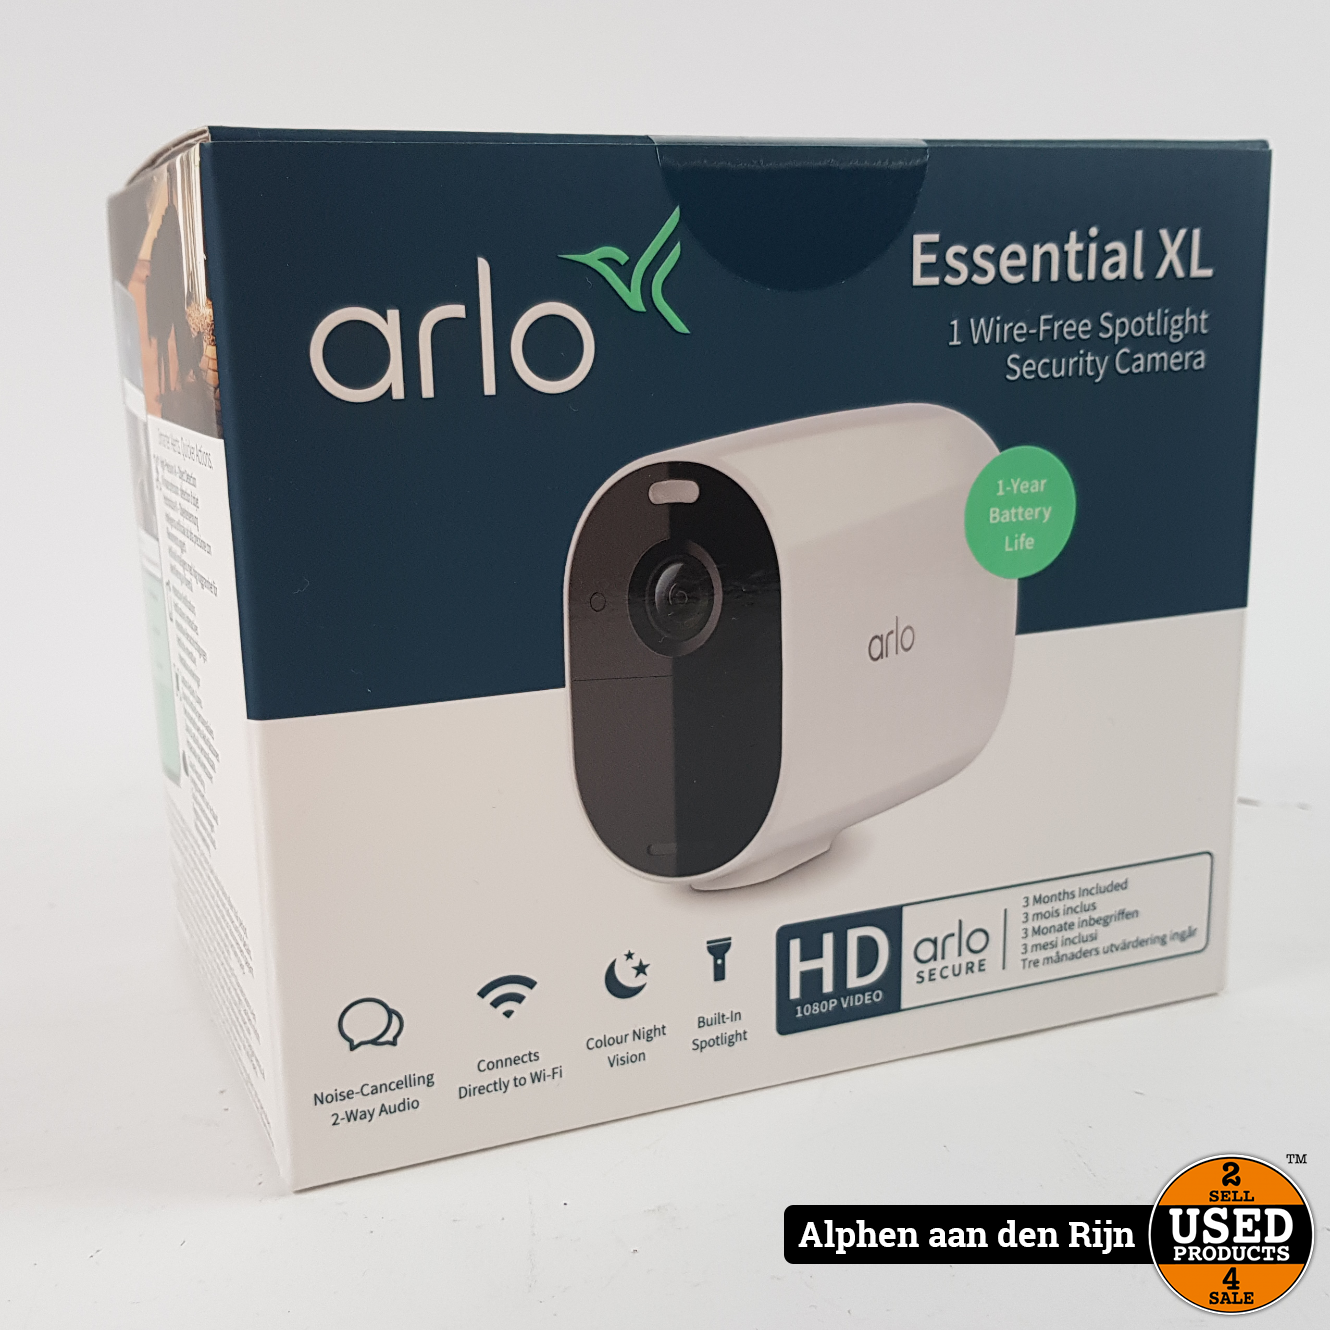 George Stevenson ik draag kleding Ieder Arlo Essential XL 1 Wire-free Spotlight security camera - Used Products  Alphen aan den Rijn